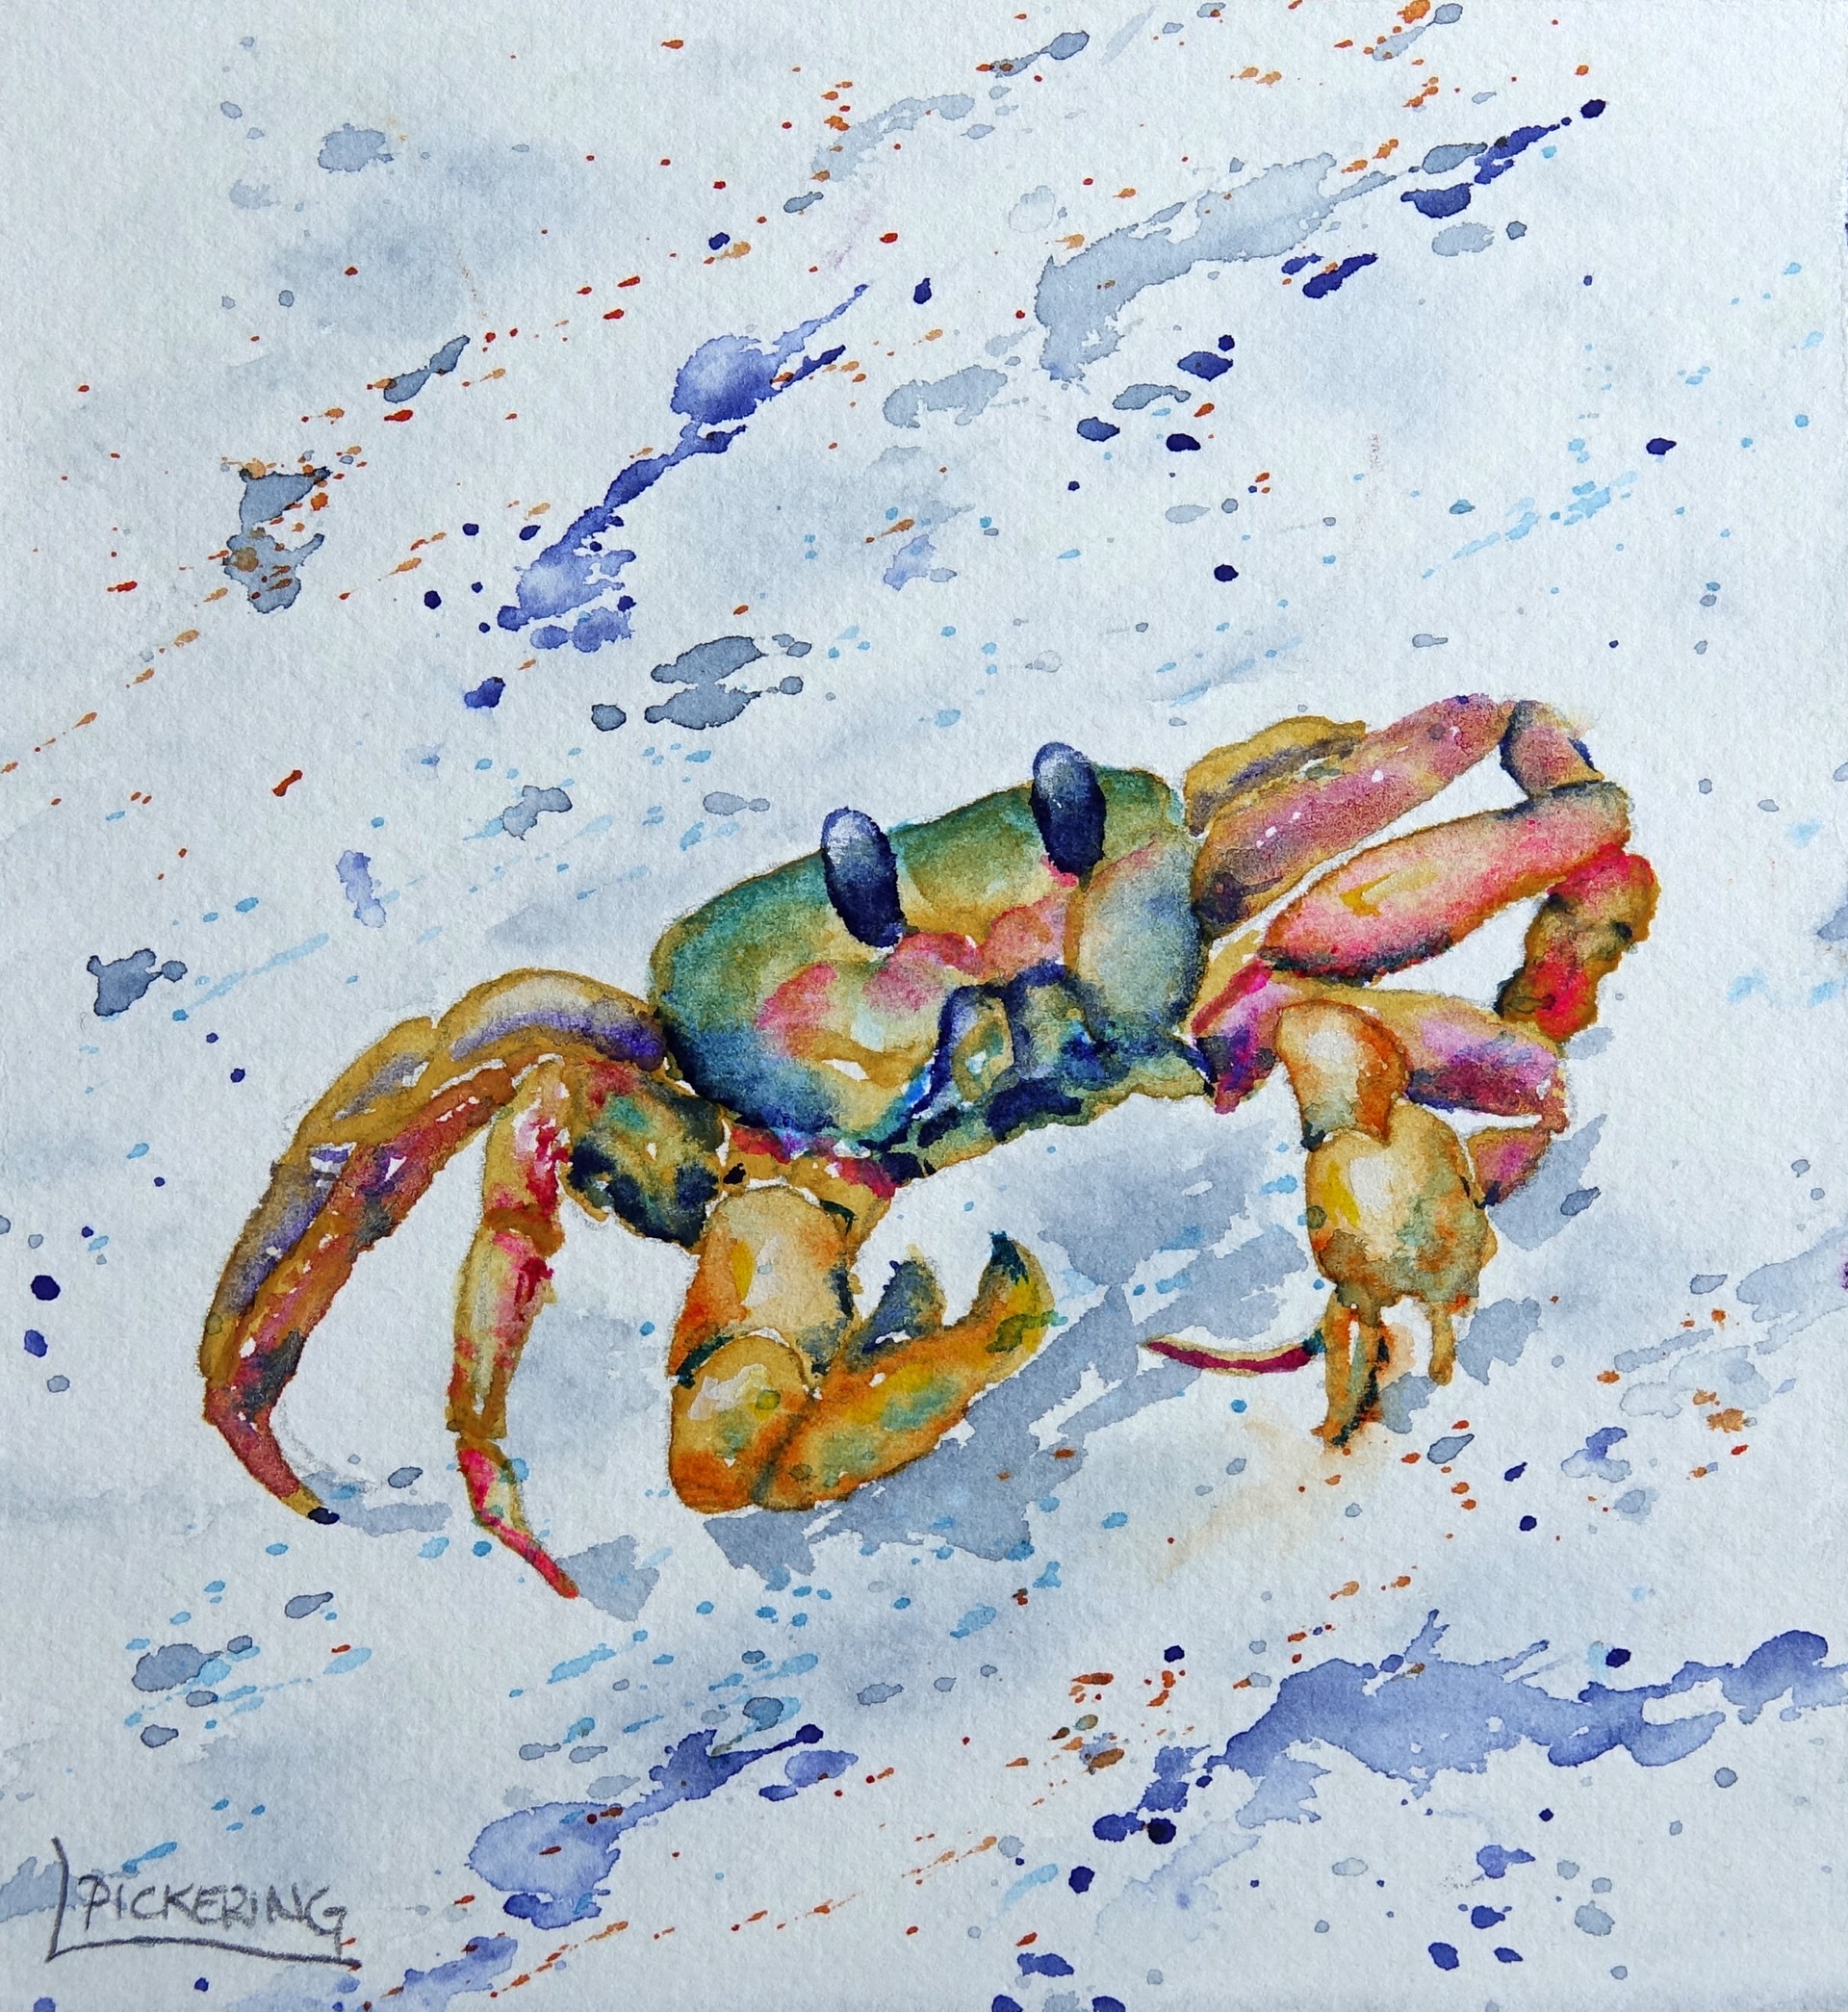 Rainbow Crab by Laura Pickering